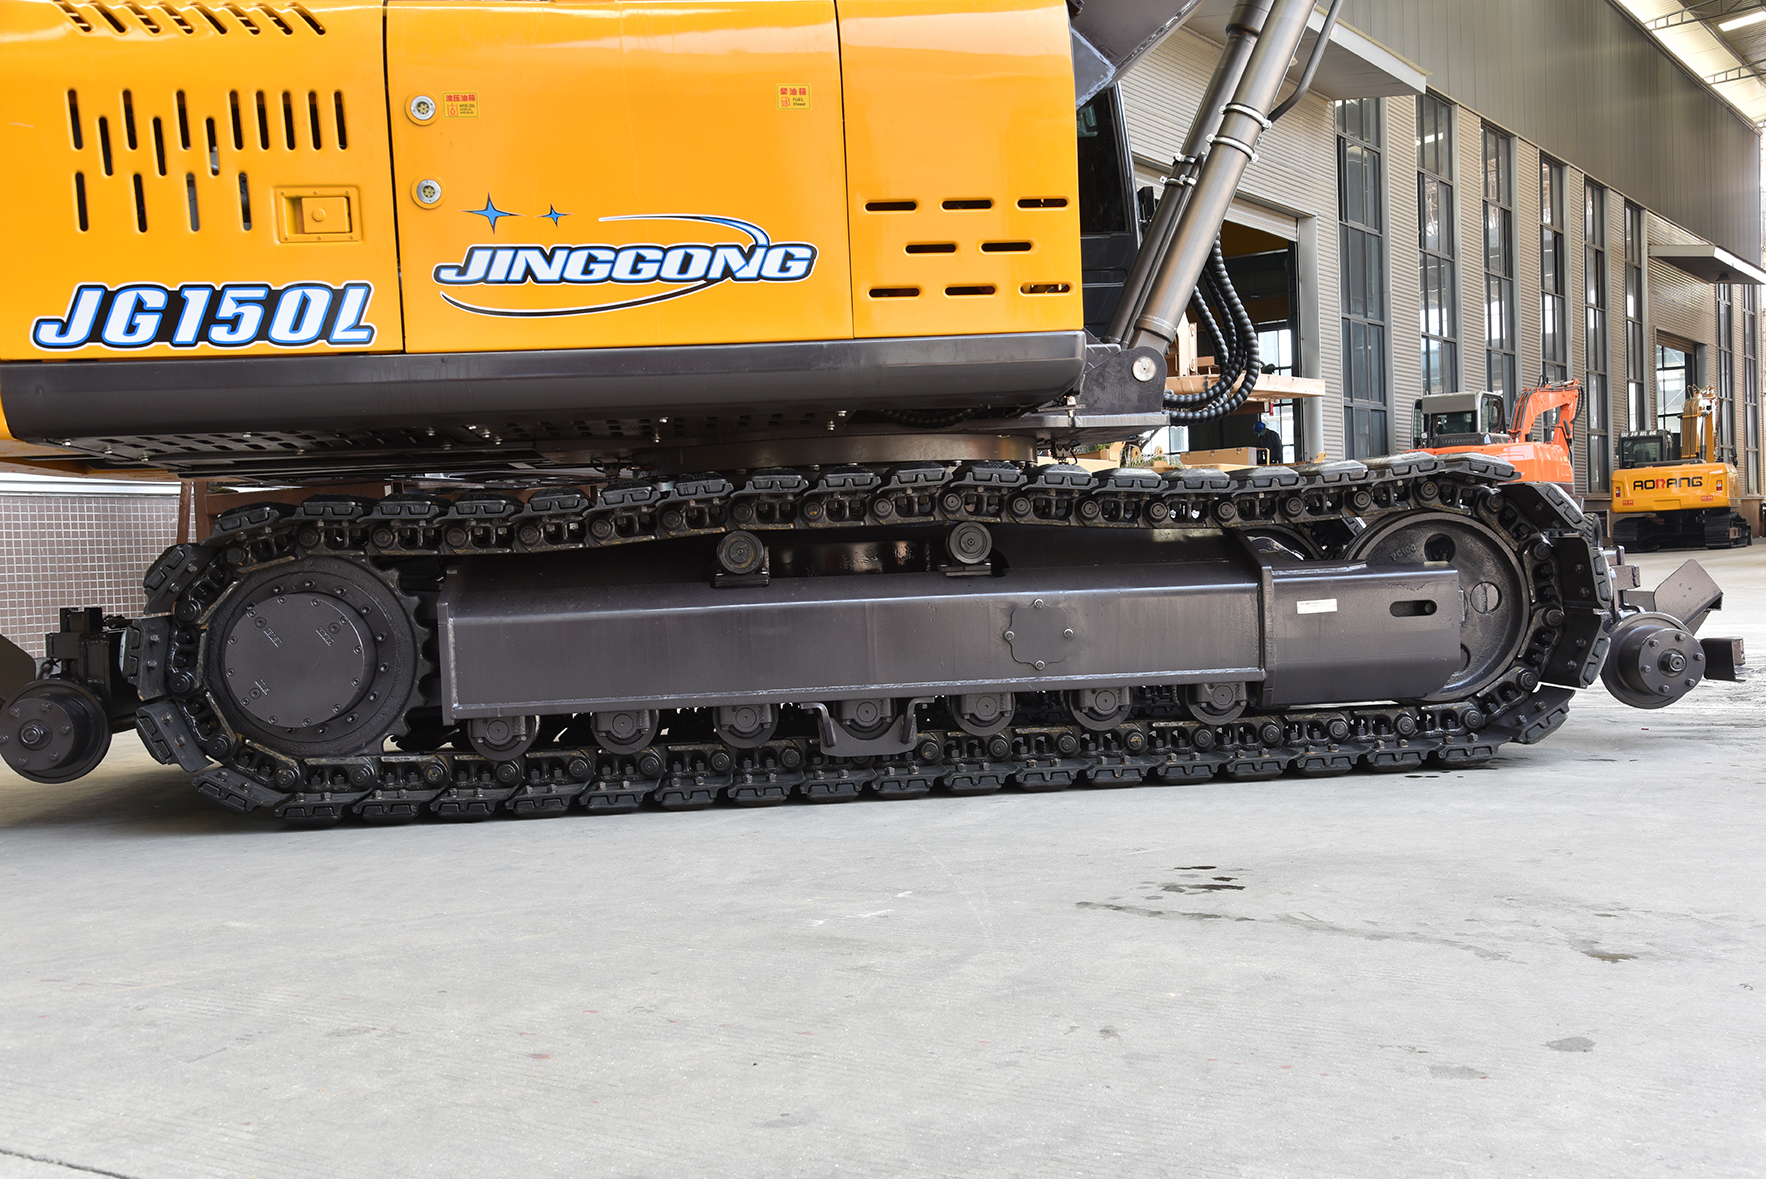 JG150L Hirail Excavator with Railway Sleeper changer